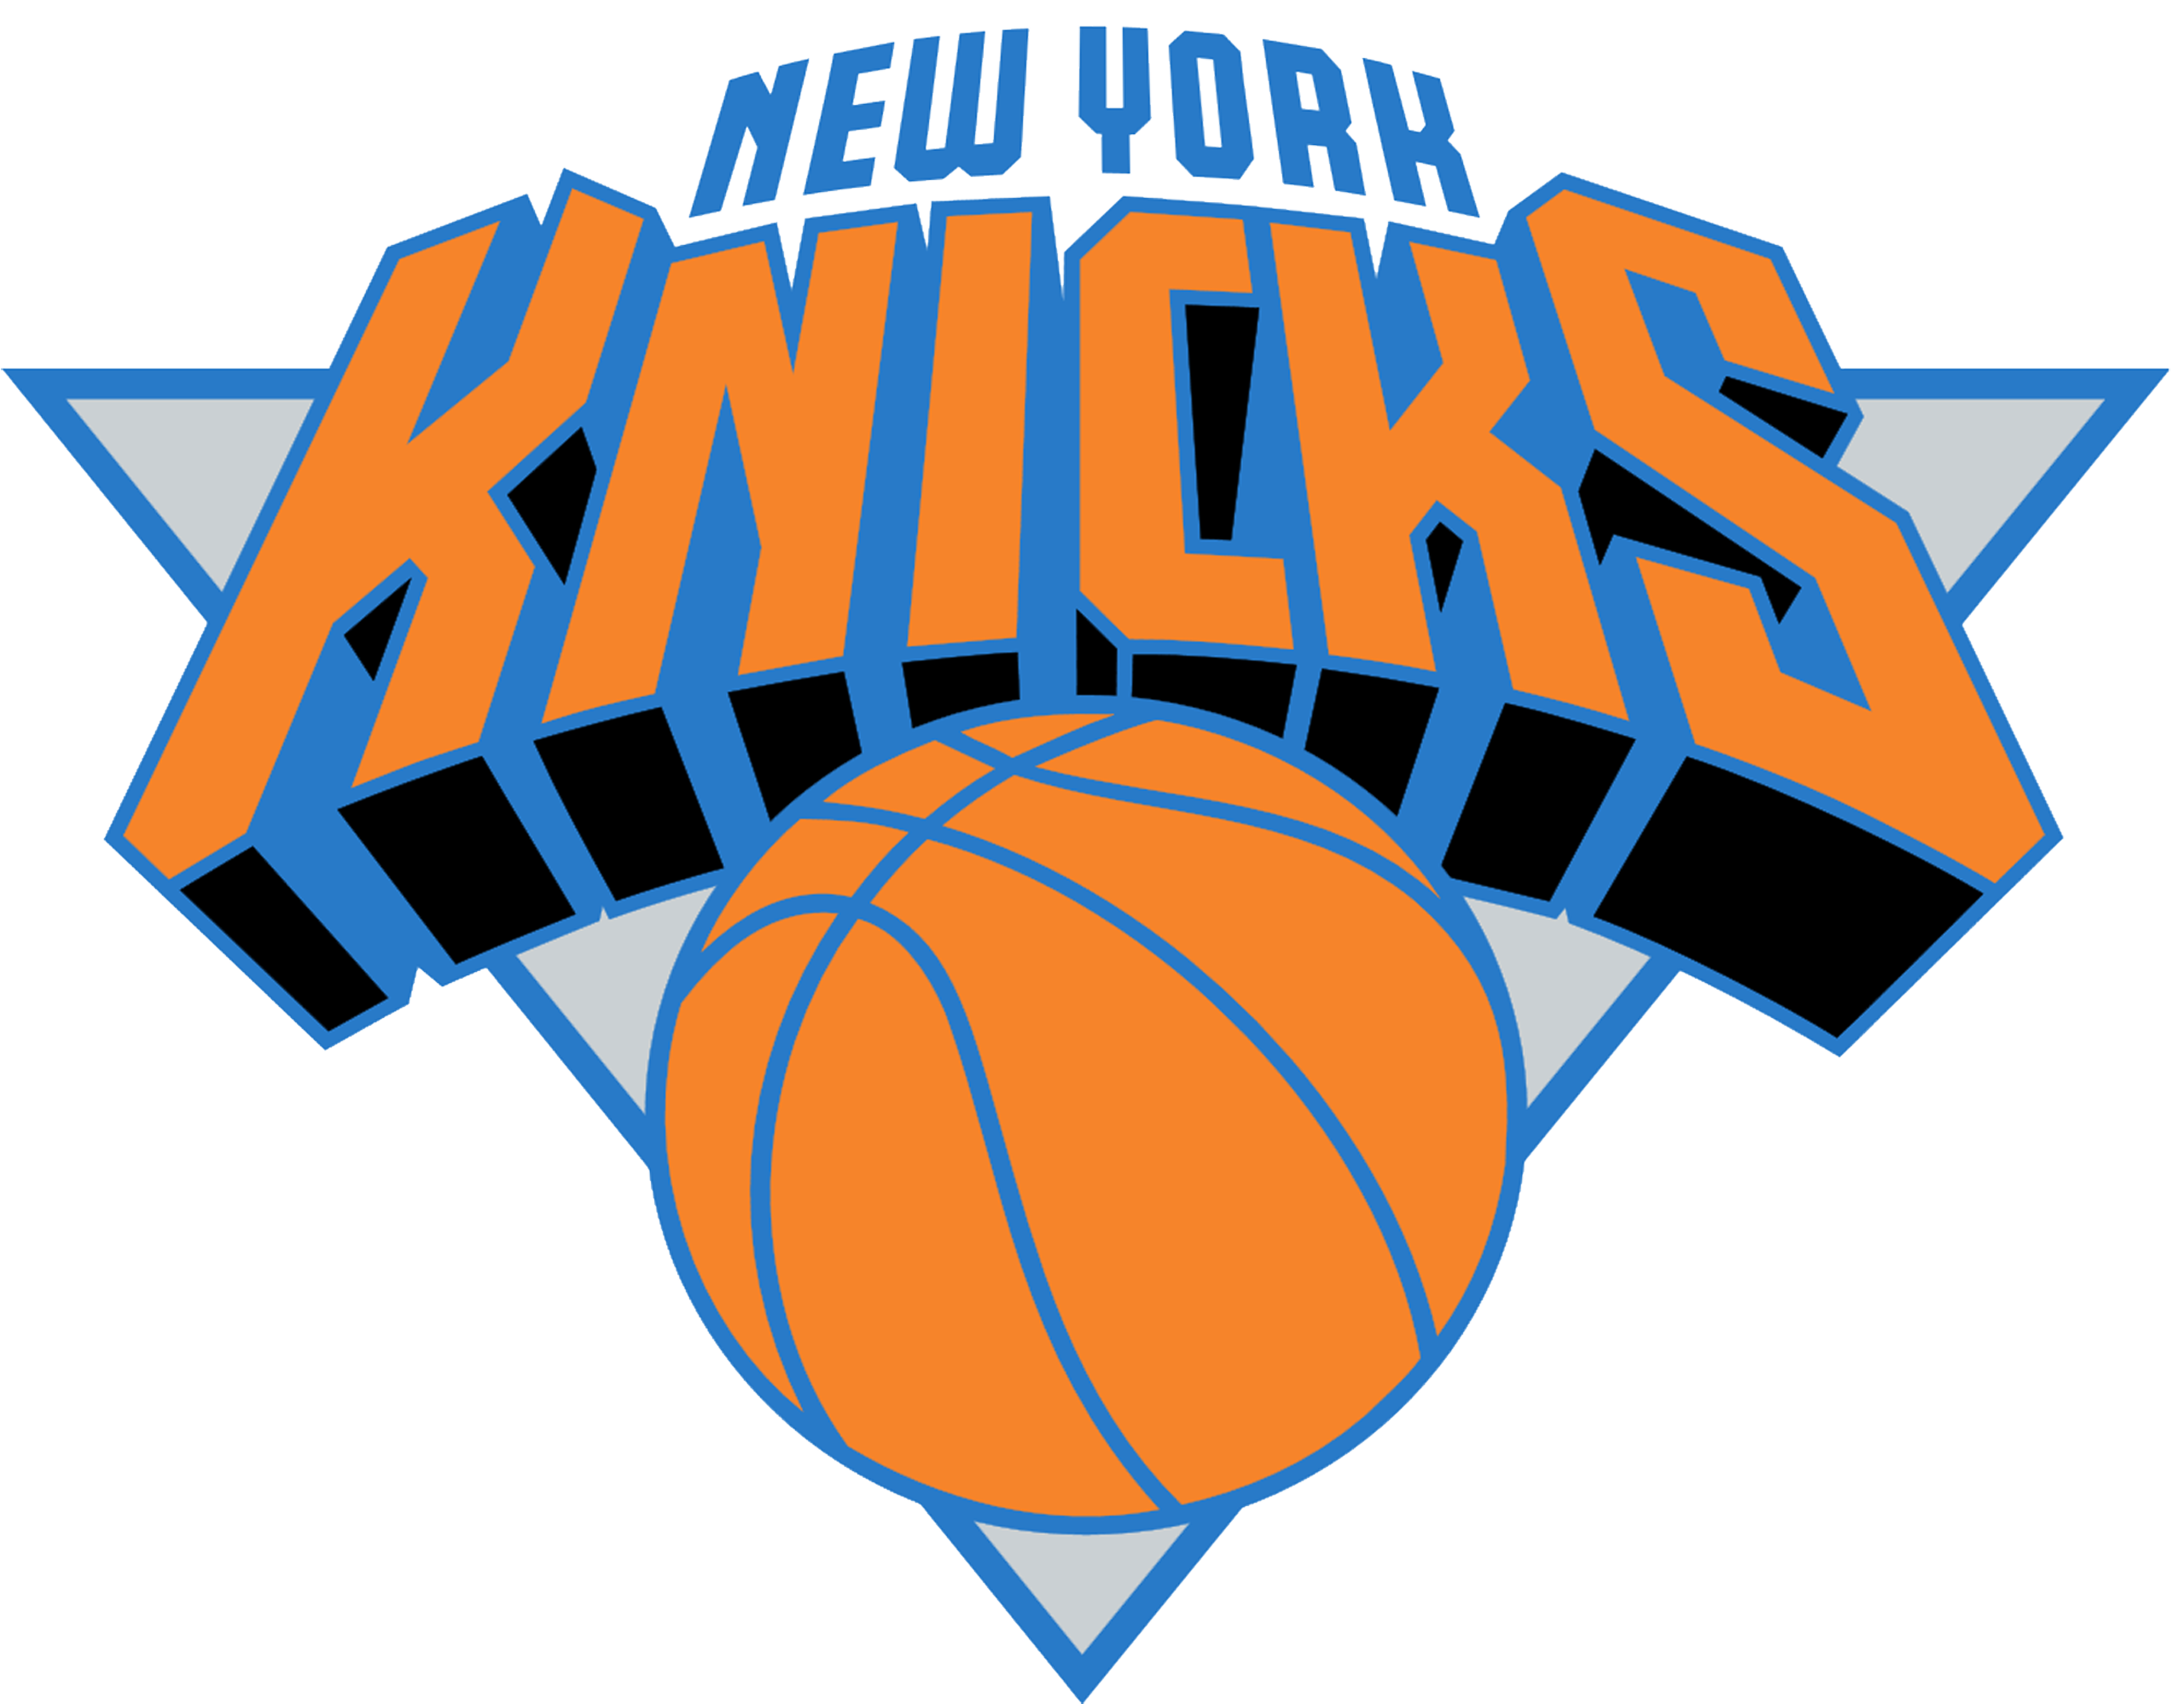 NEW YORK KNICKS Basketball Nba logo wallpaper over white Wallpapers HD